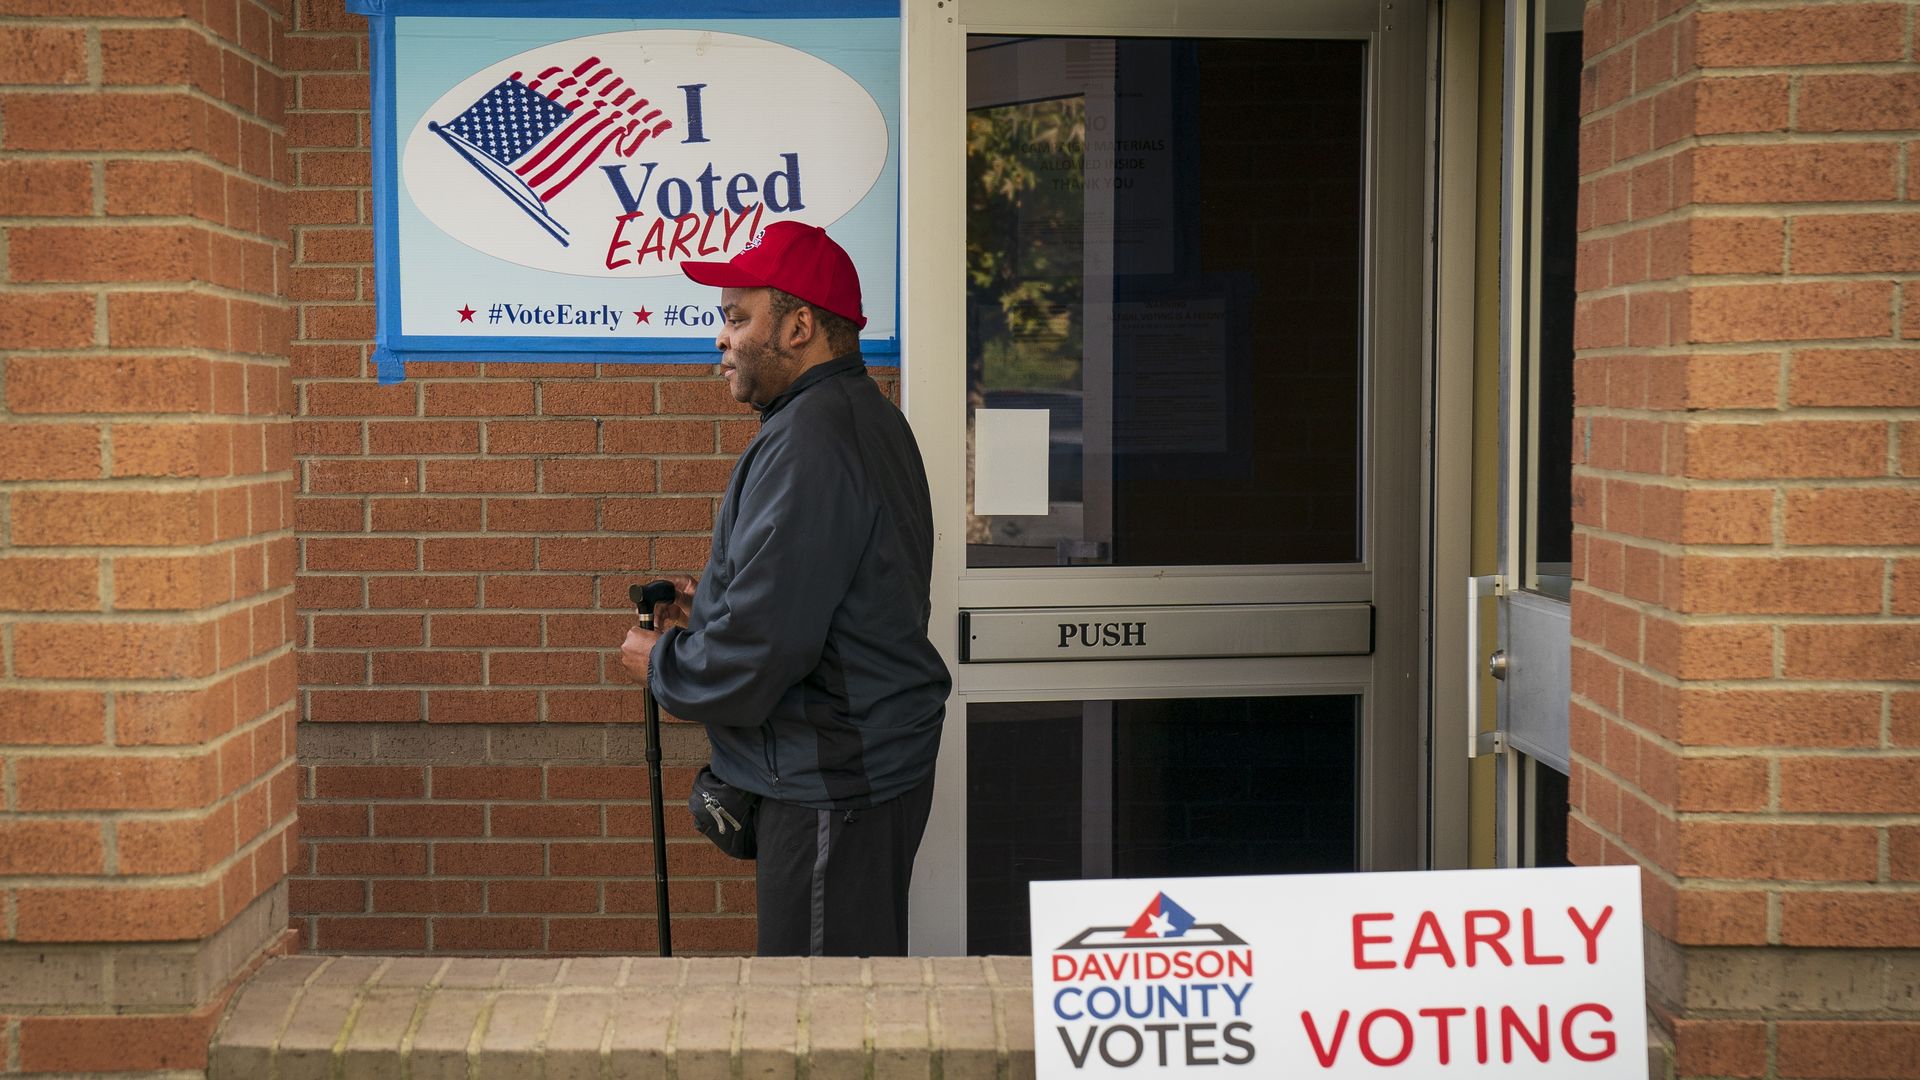  A voter exits a polling place